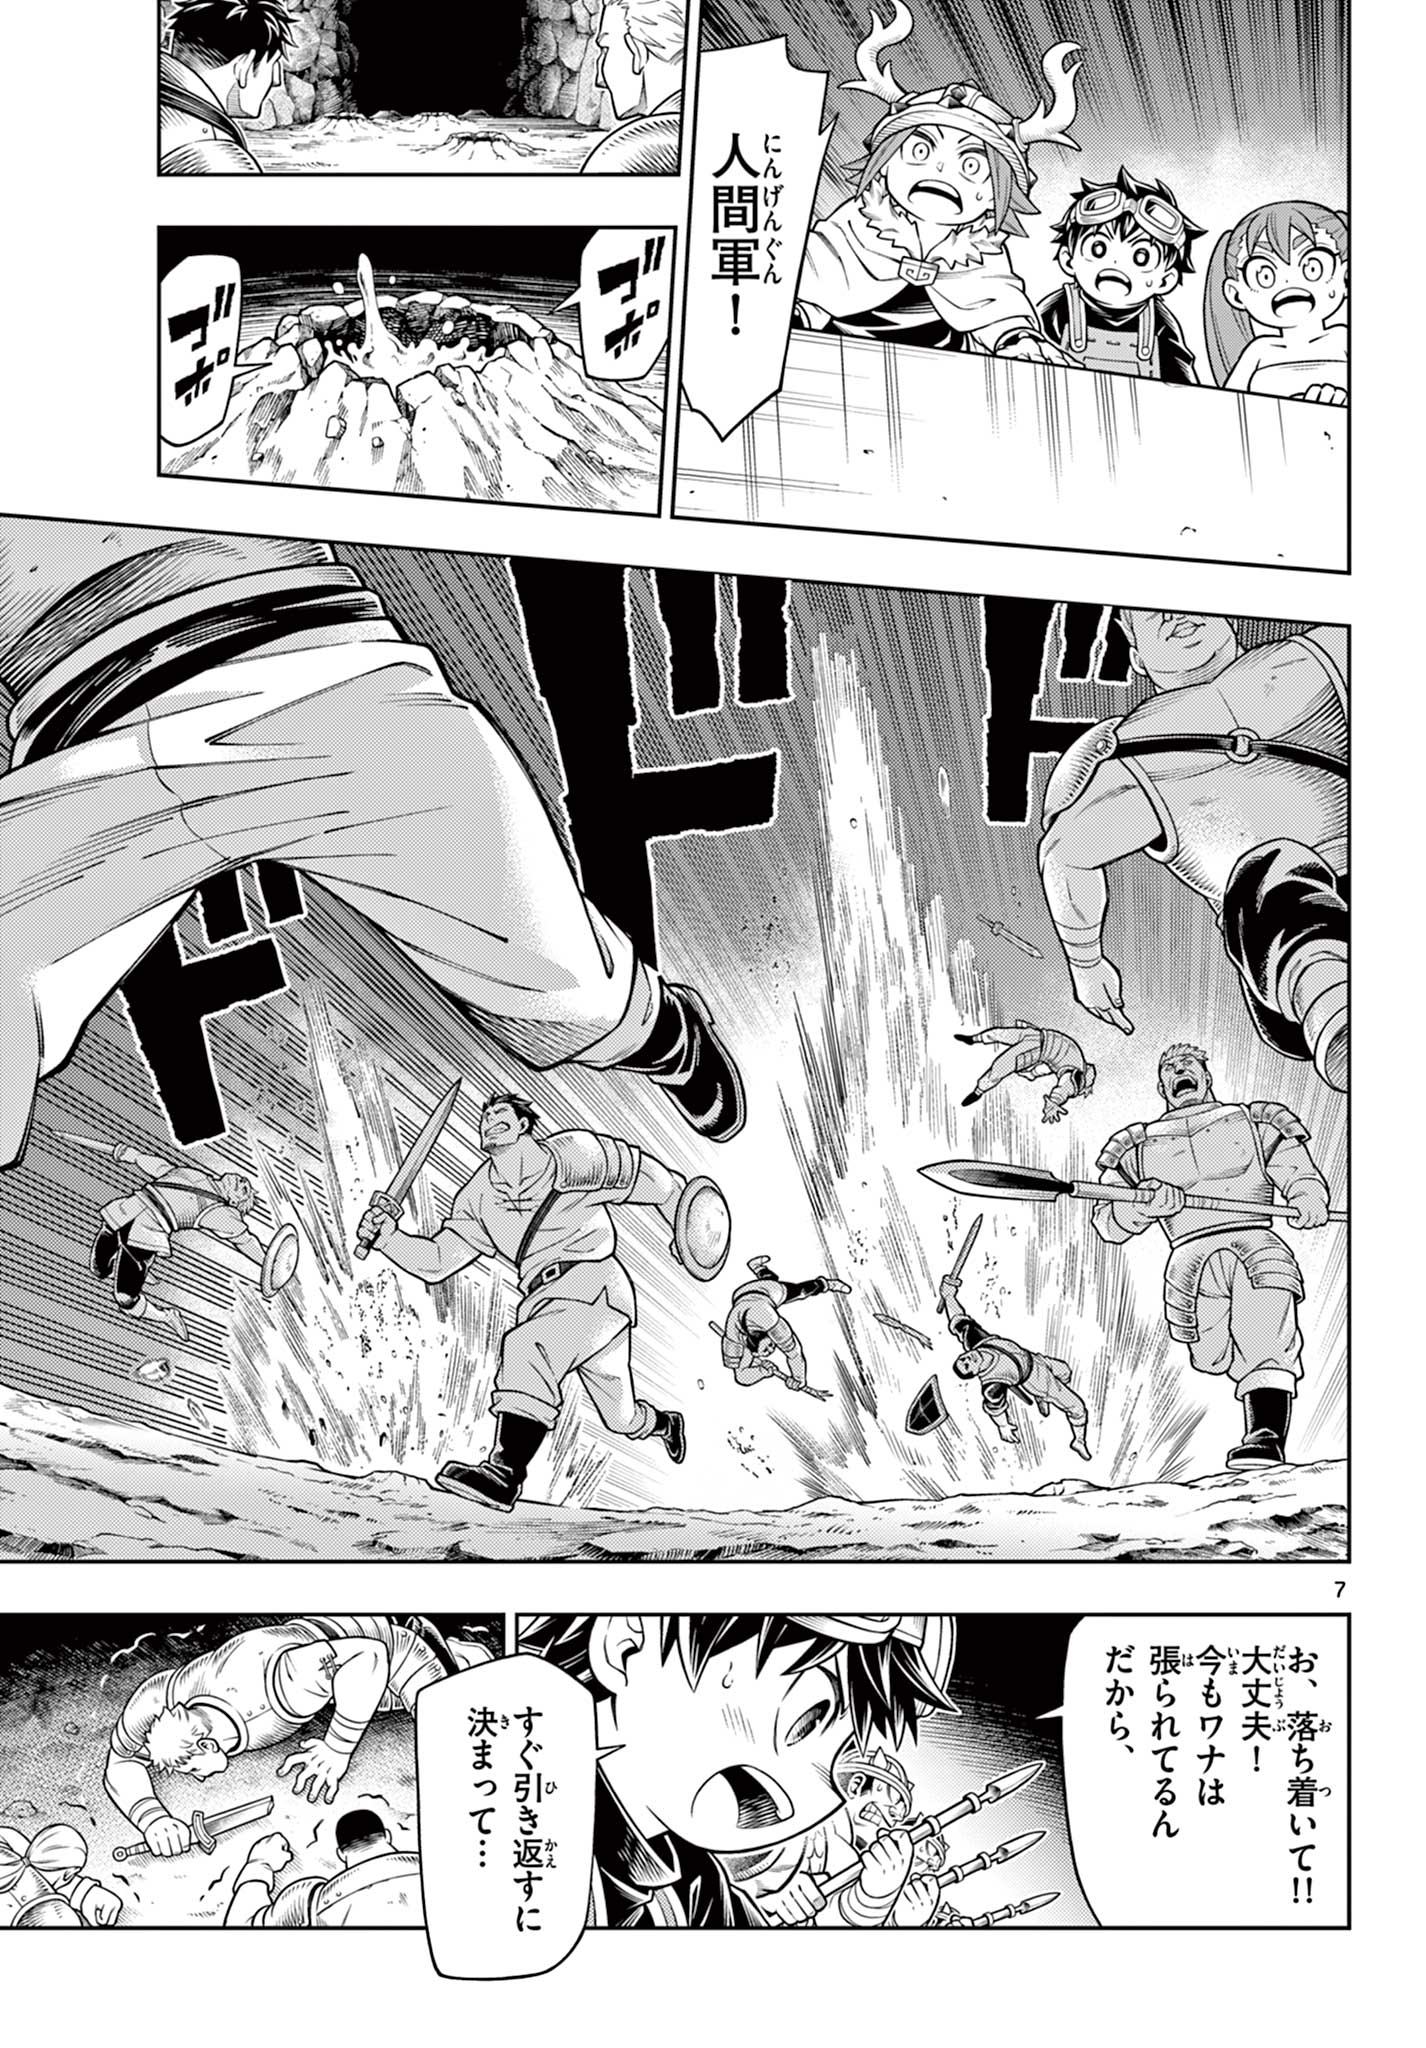 Soara to Mamono no ie - Chapter 28 - Page 7